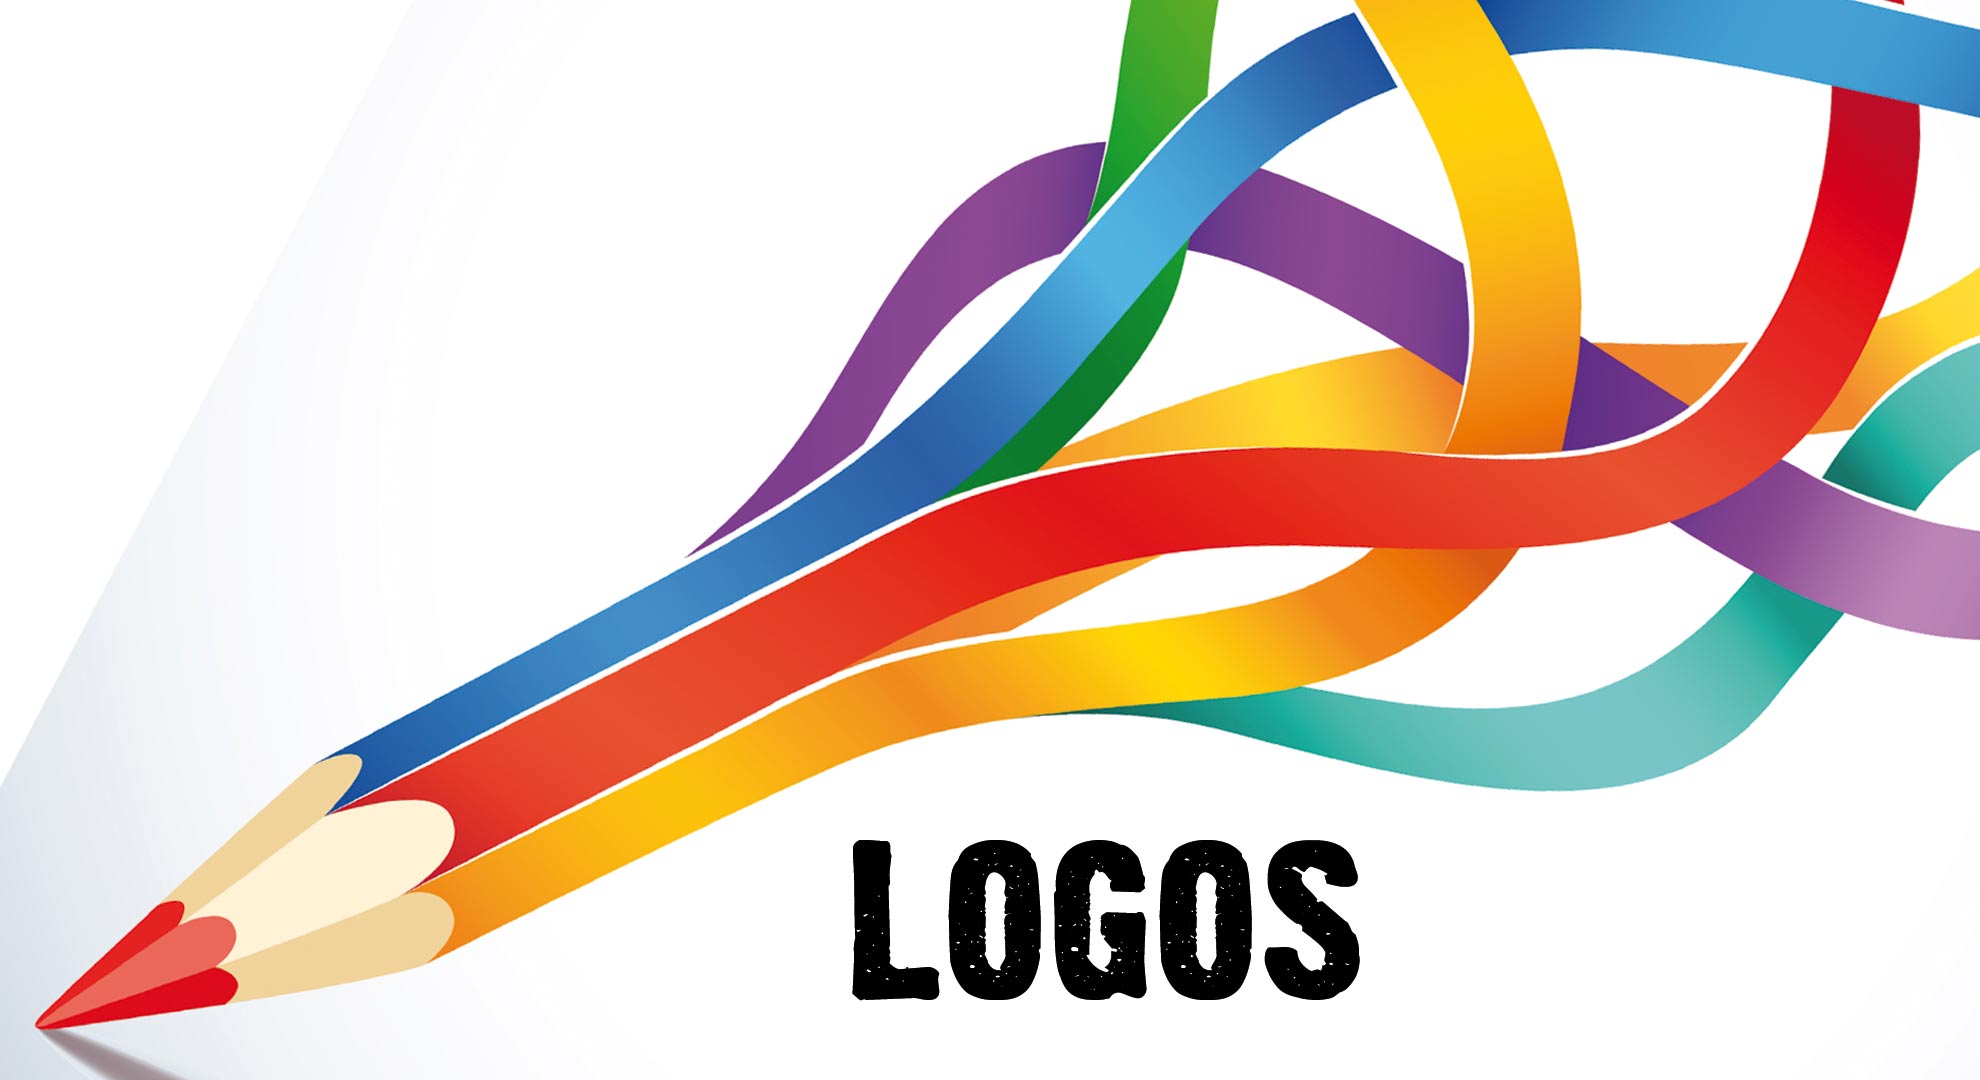 graphic design logo maker